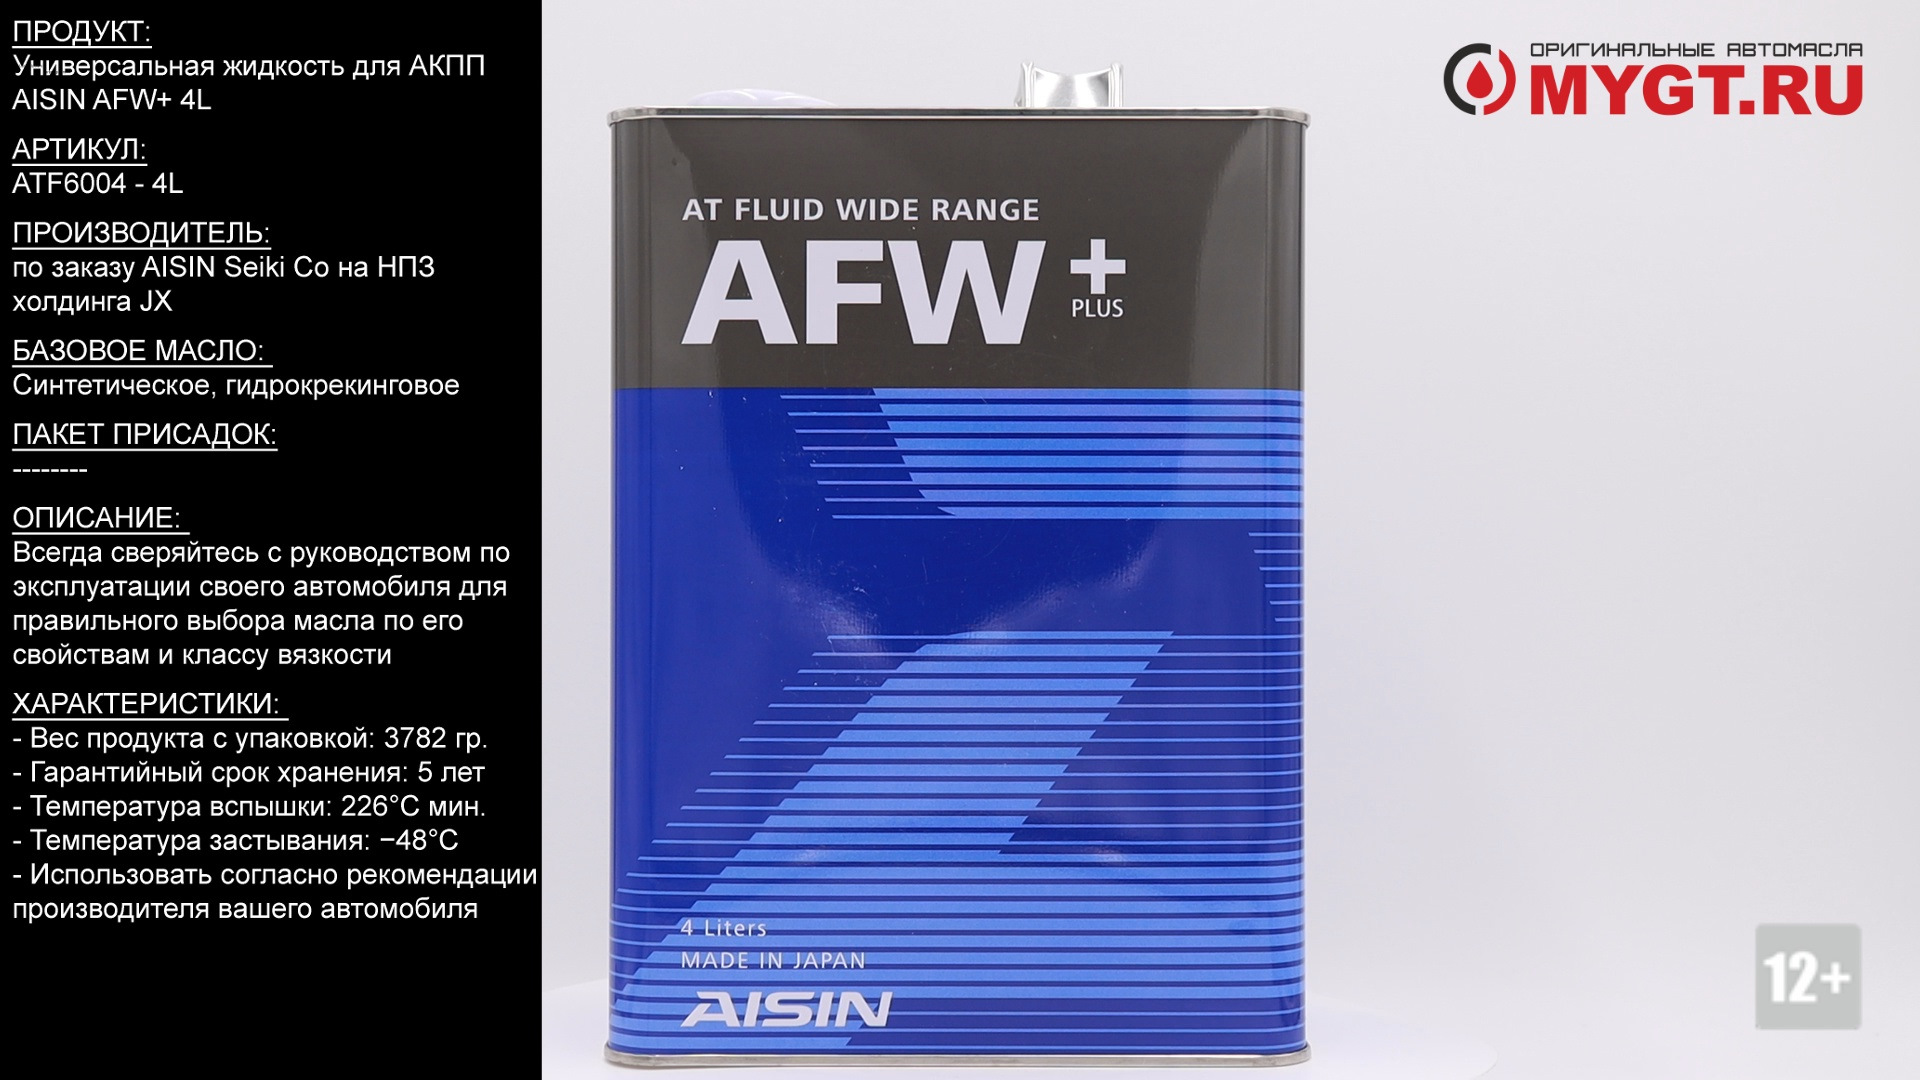 Atf afw. Масло AISIN CVT CFEX cvtf7004 4л. ATF wide range AFW+ 4л. AISIN 6004 AFW+. AISIN ATF AFW+ артикул.